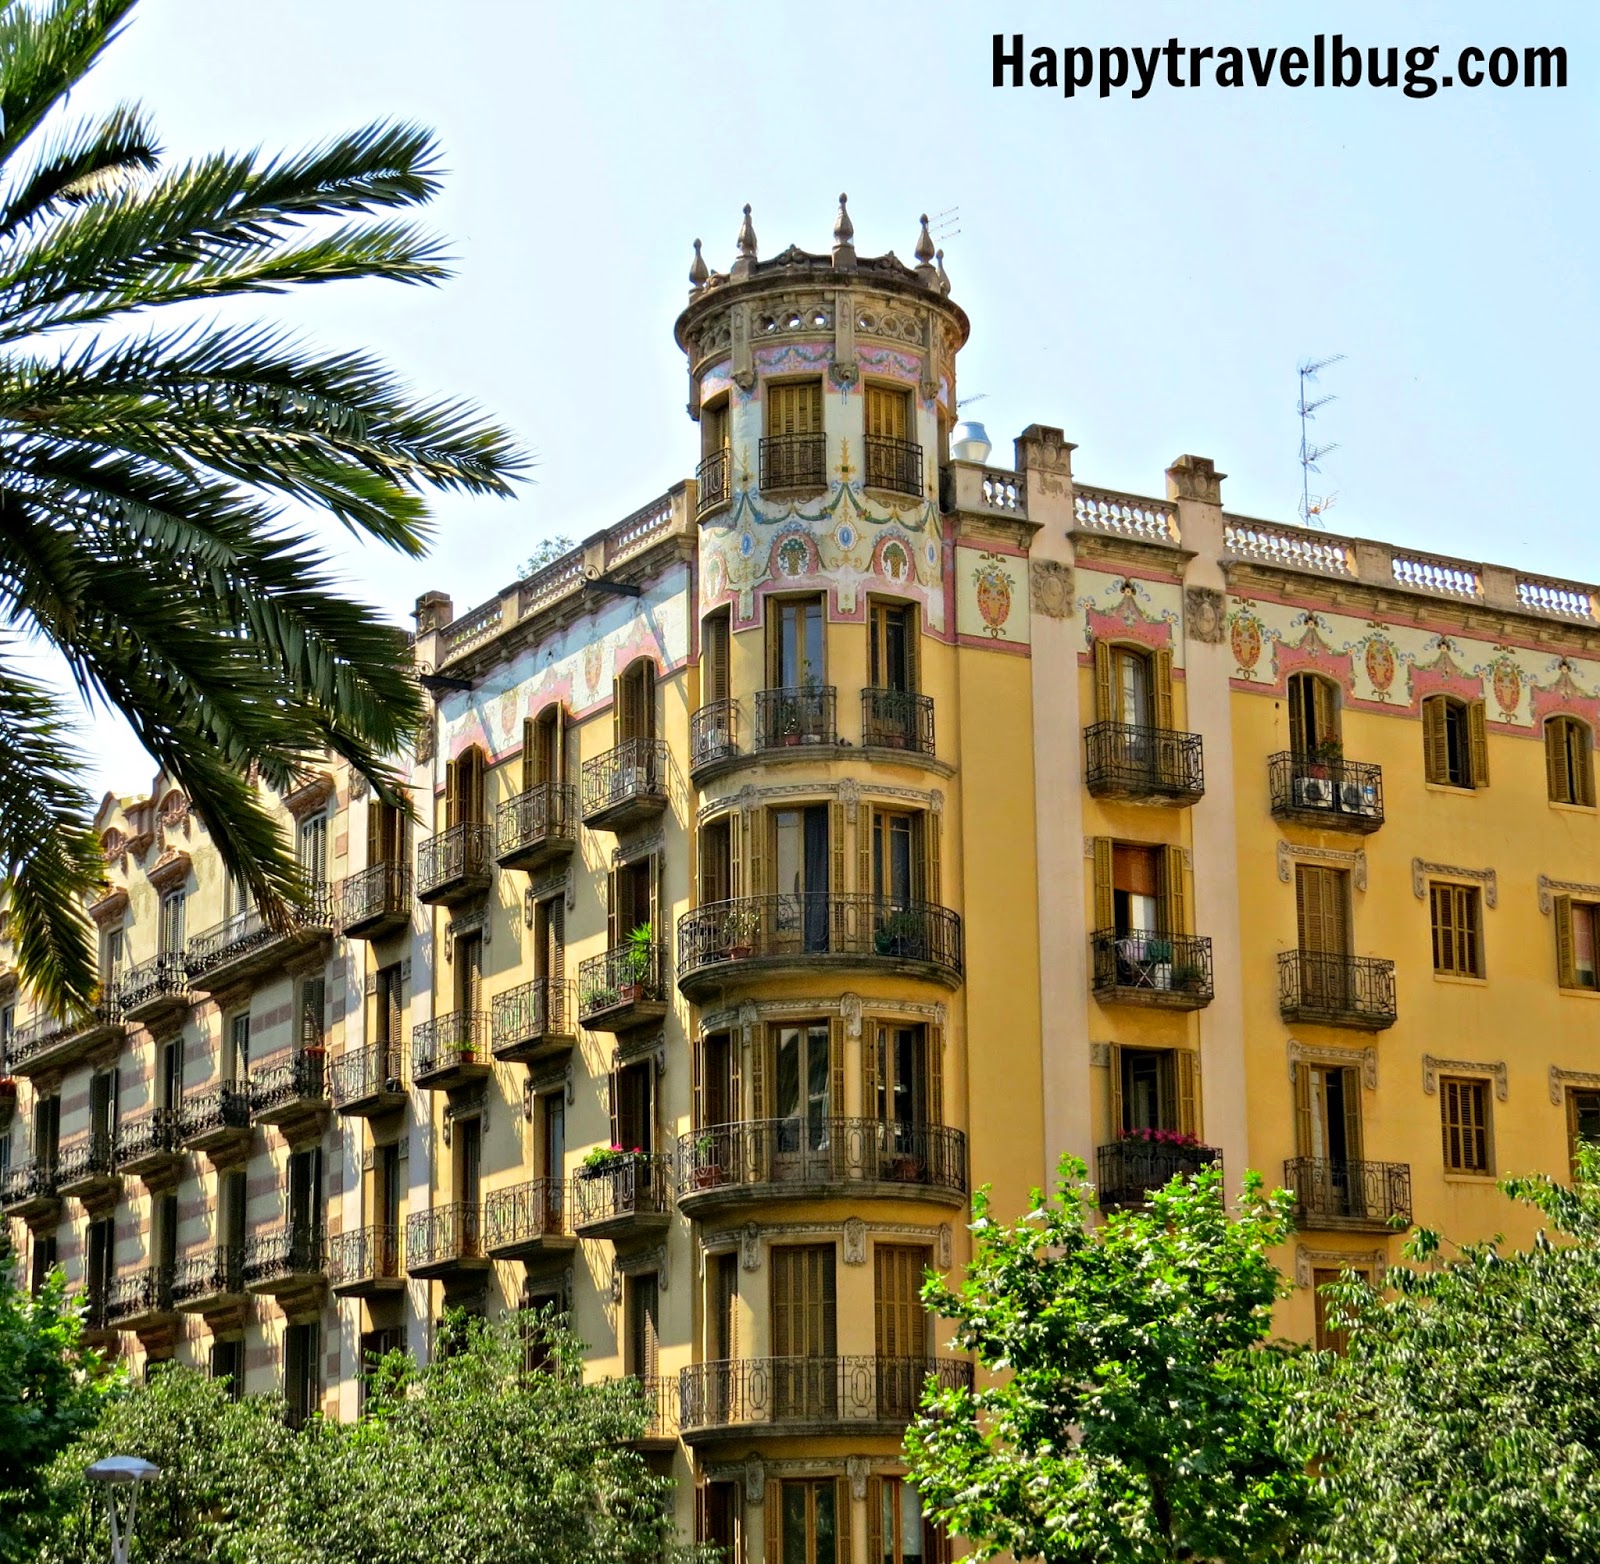 The {Happy} Travel Bug: Barcelona's Balconies